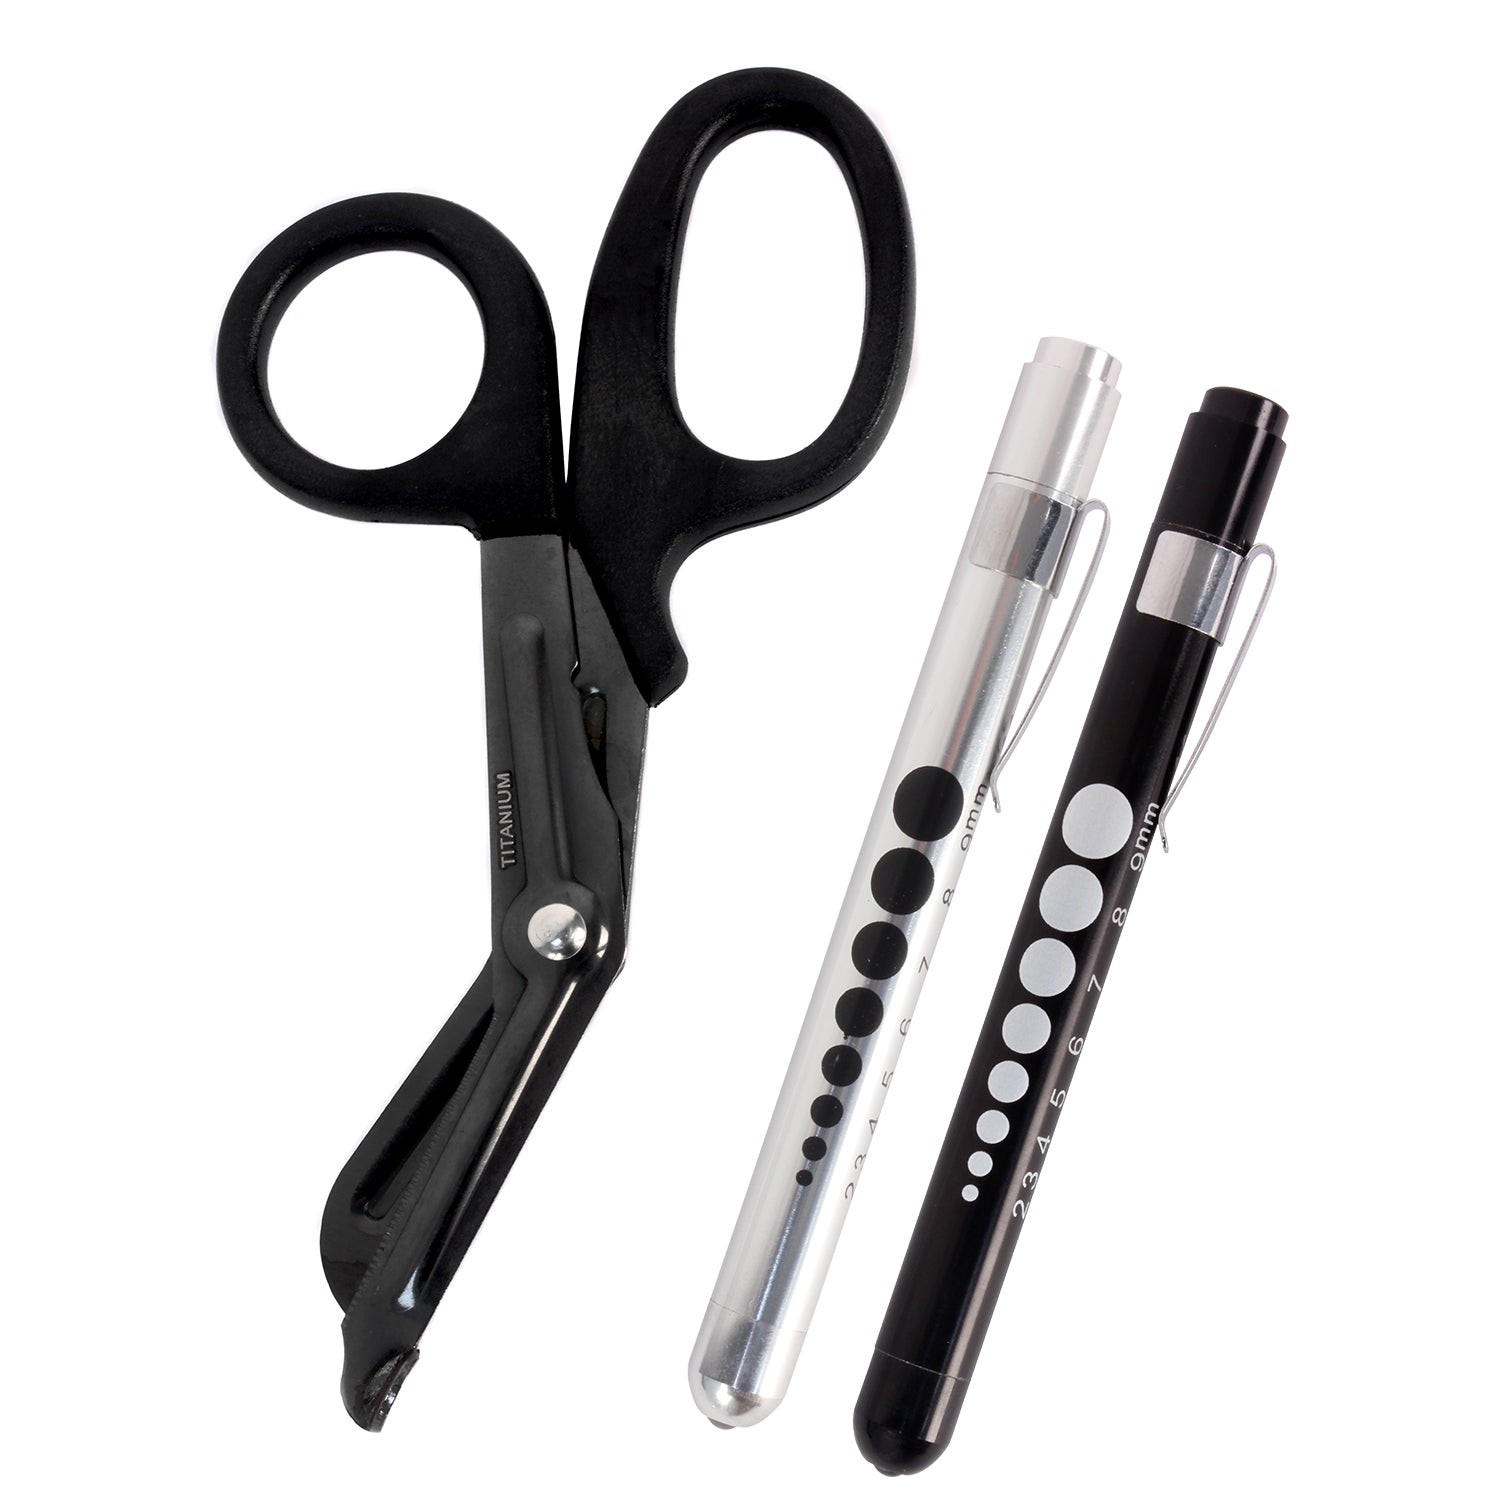 MediTac Titanium-Bonded EMT Trauma Shears – 7 ¼” Black Medical Bandage Scissors with LED Pen Light Two Pack